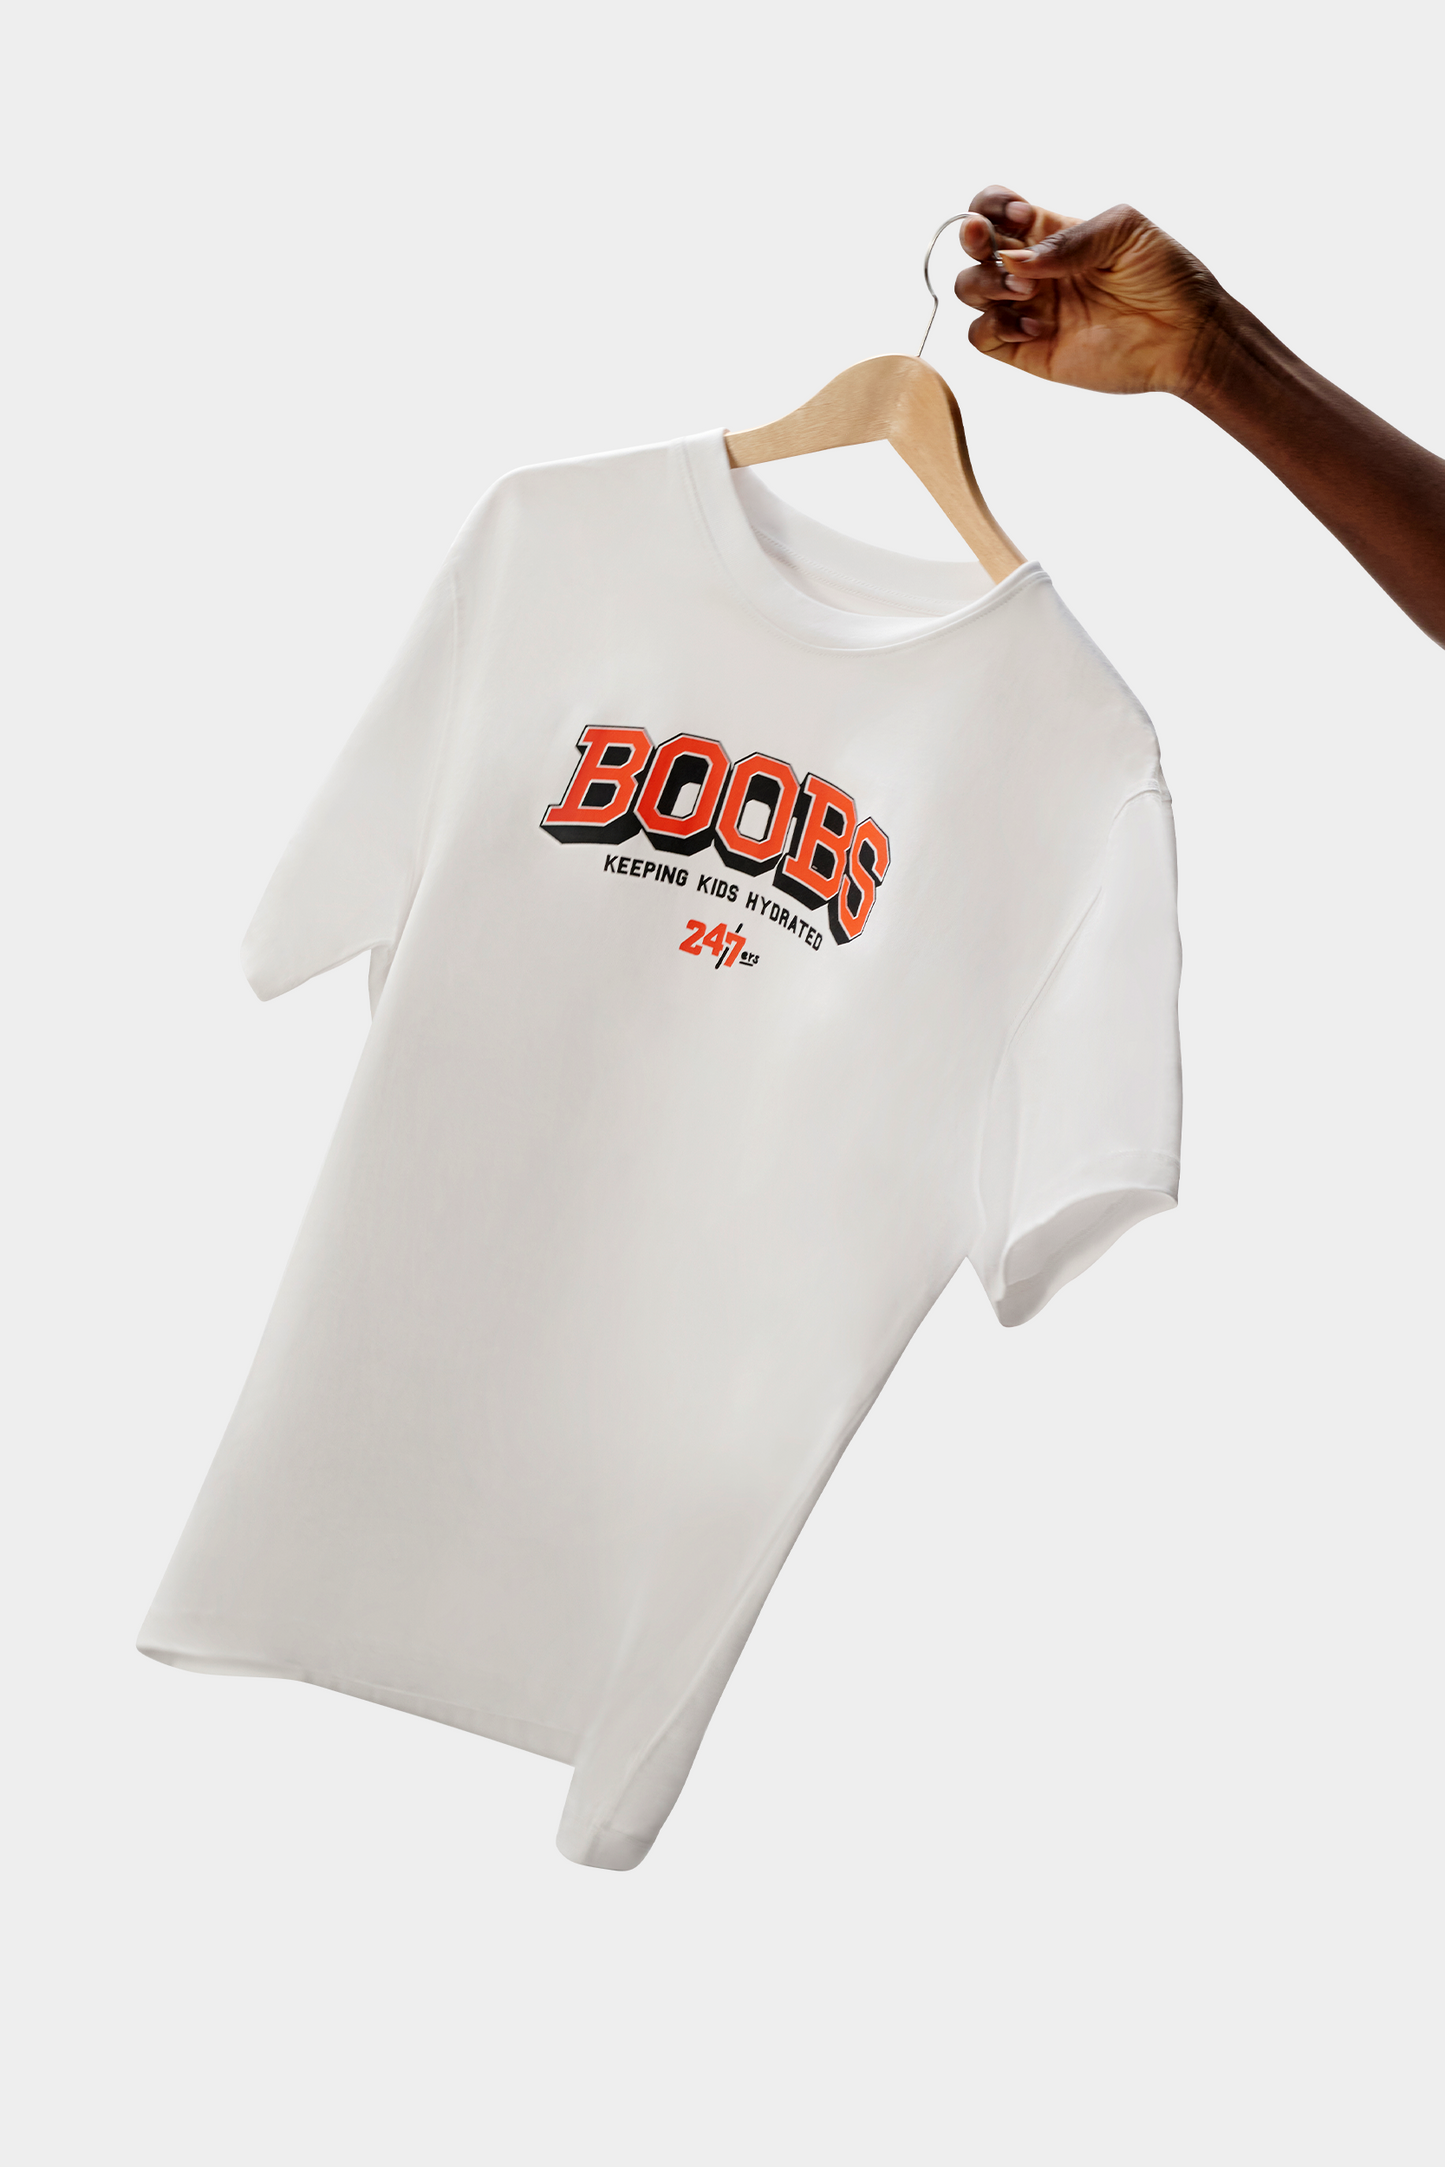 Shirt & Cap 24/7ers »Boobs«